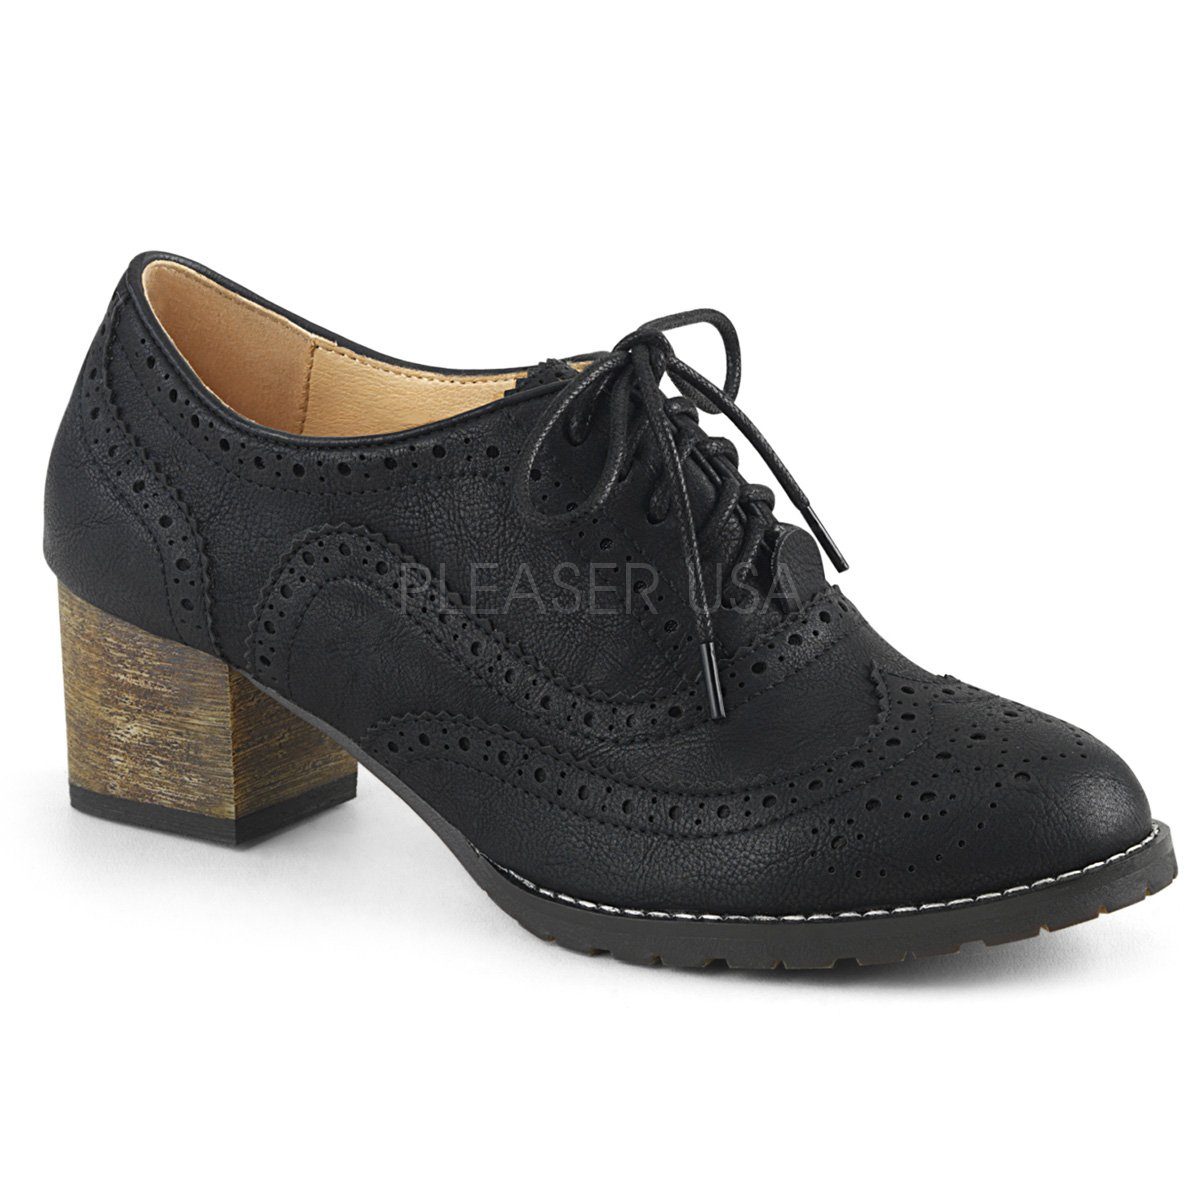 Pin Up Couture »Pin Up Couture Herren Schuhe RUSSELL-34 schwarz SALE«  High-Heel-Pumps online kaufen | OTTO